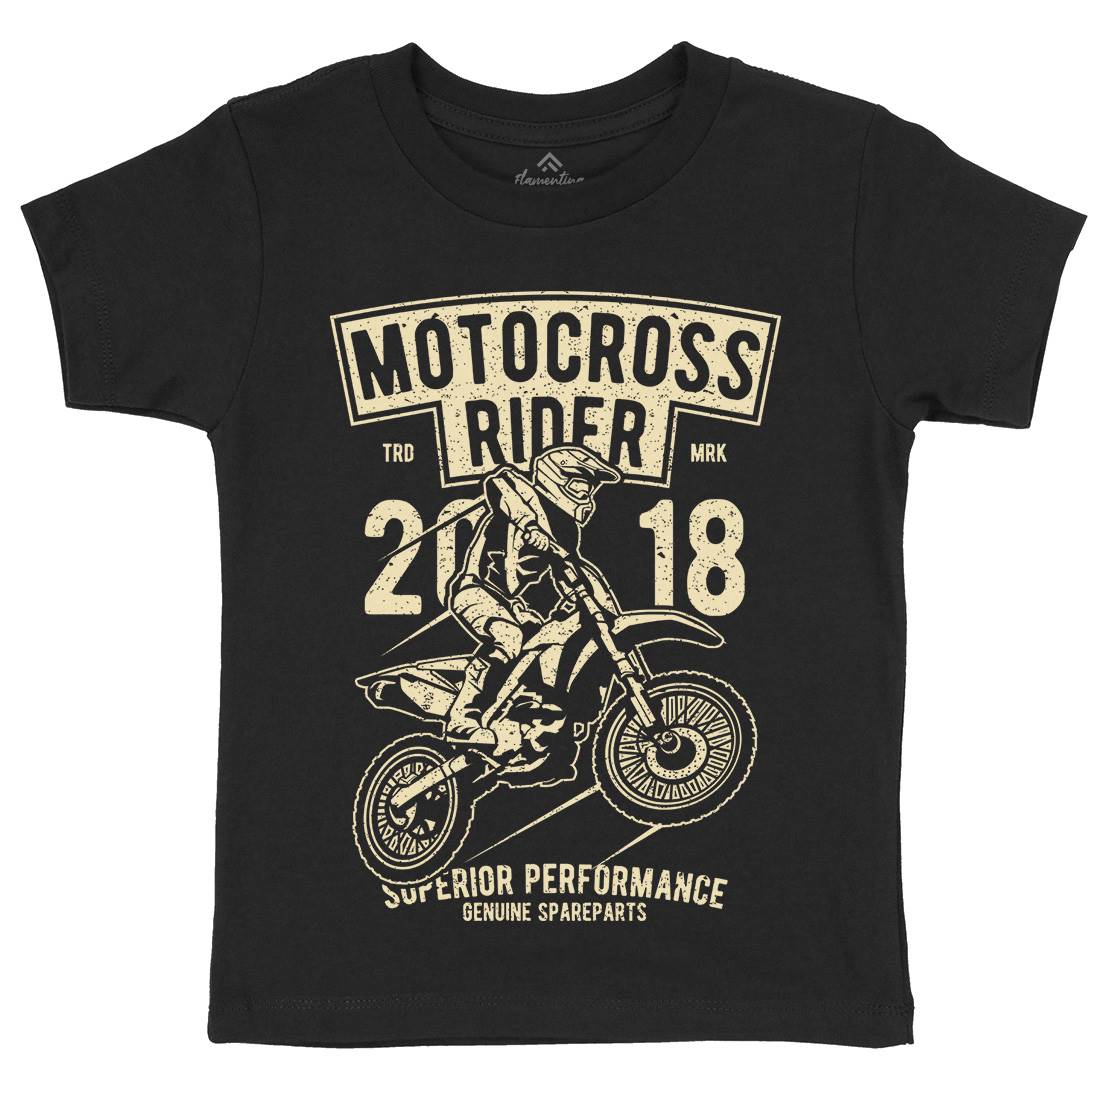 Motocross Rider Kids Crew Neck T-Shirt Motorcycles A718